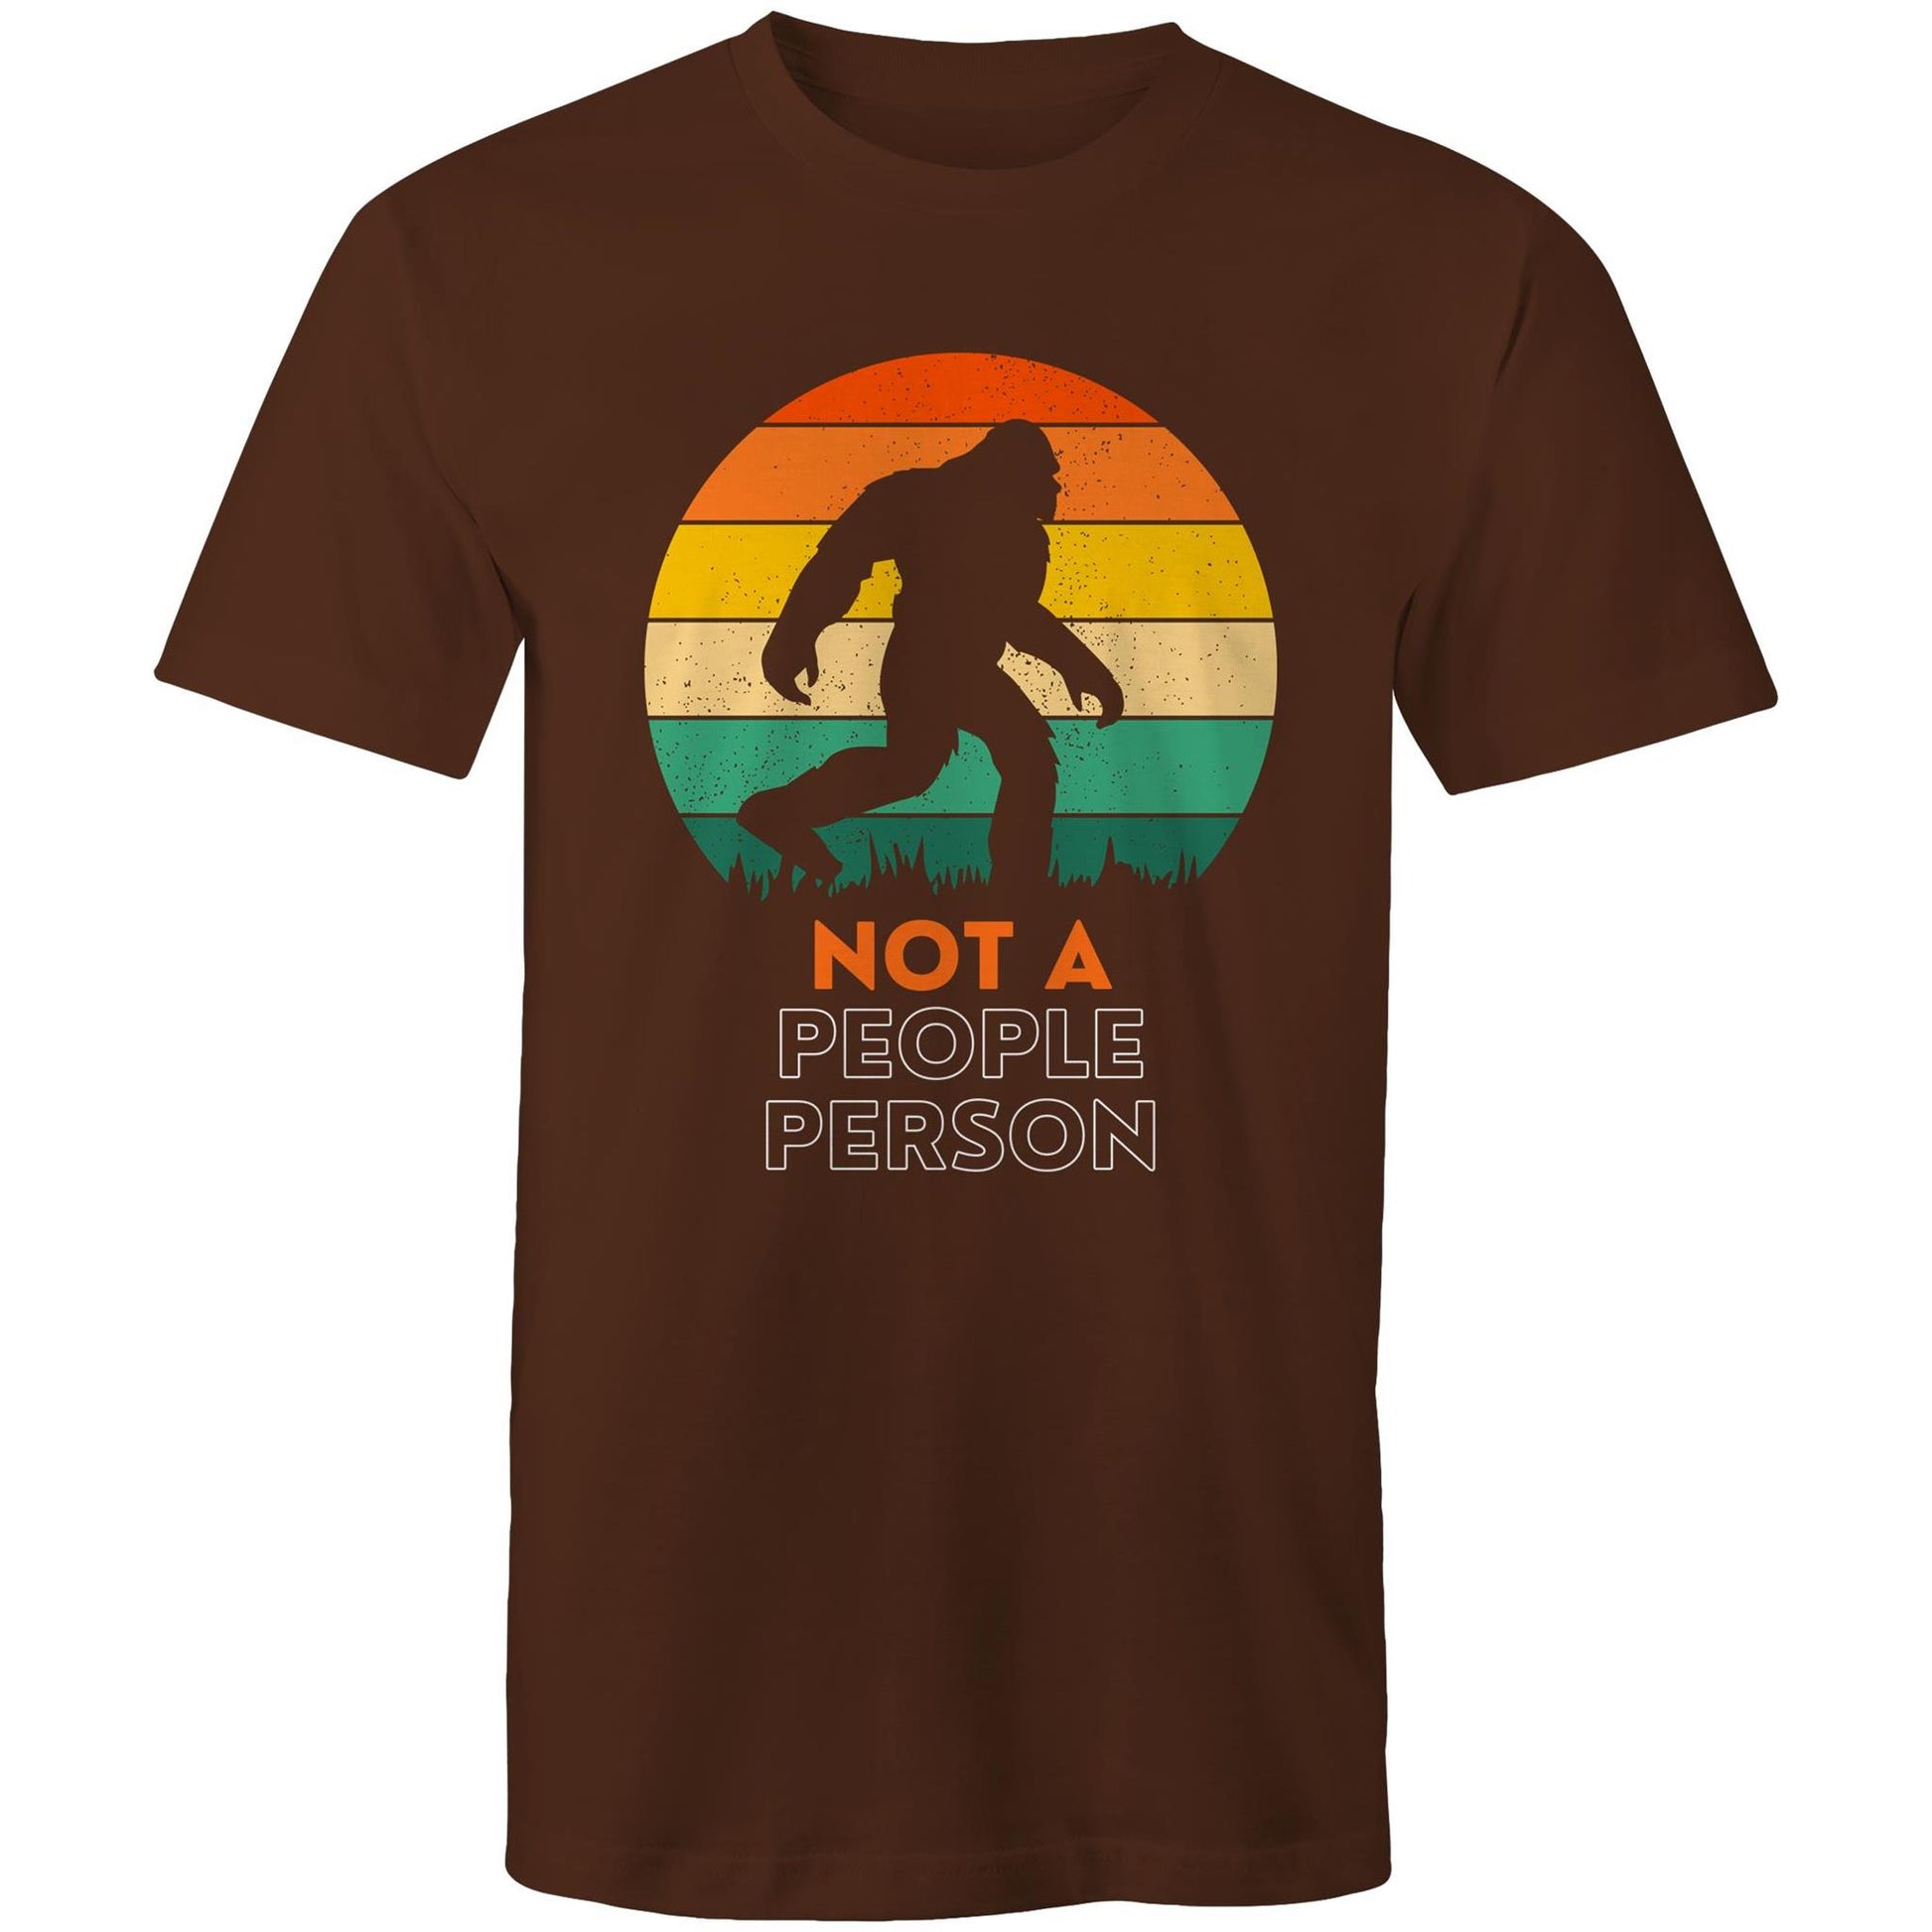 Not A People Person, Big Foot, Sasquatch, Yeti - Mens T-Shirt Dark Chocolate Mens T-shirt Funny